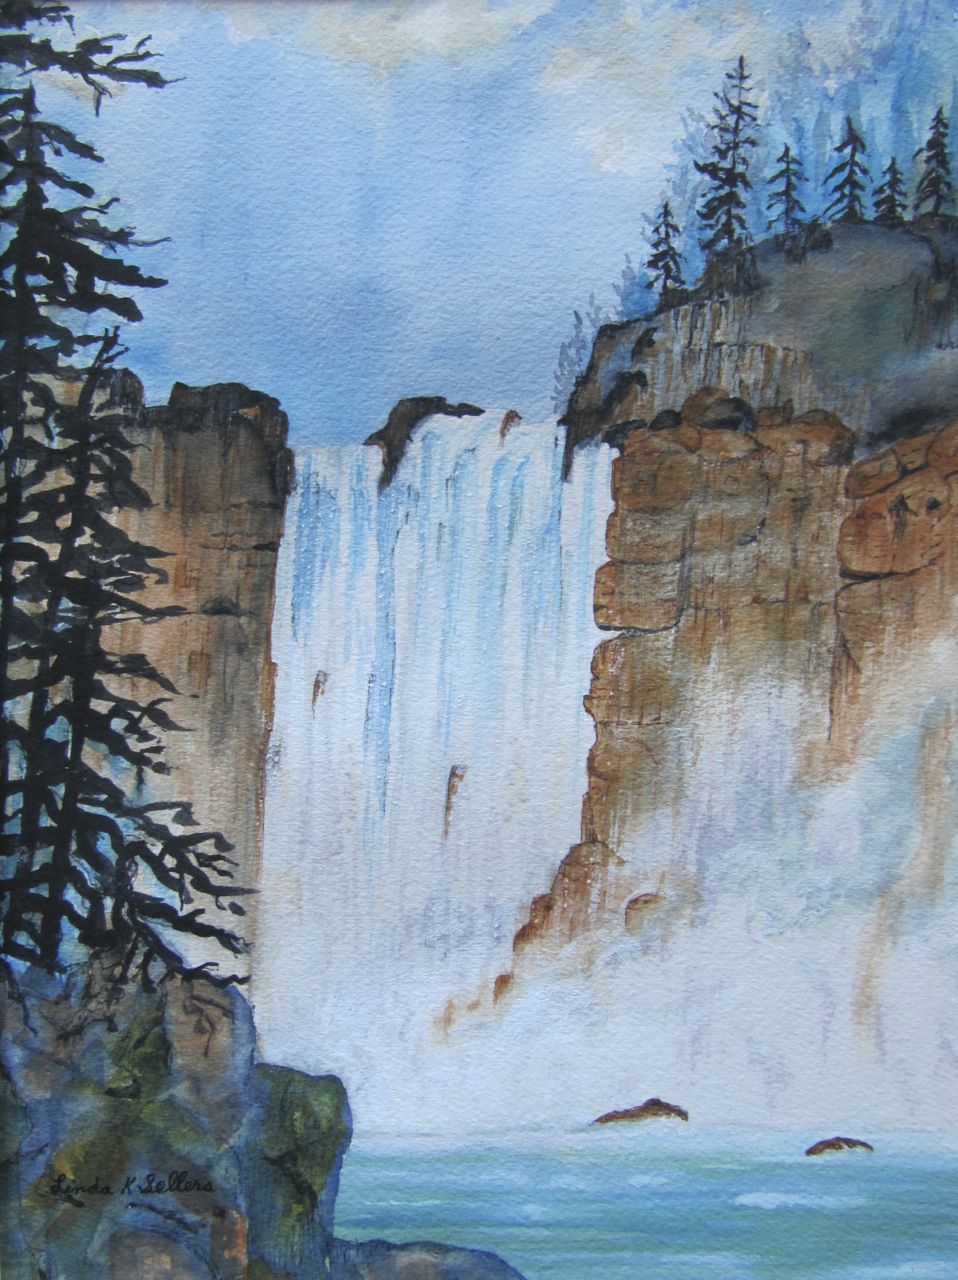 Cascading Falls